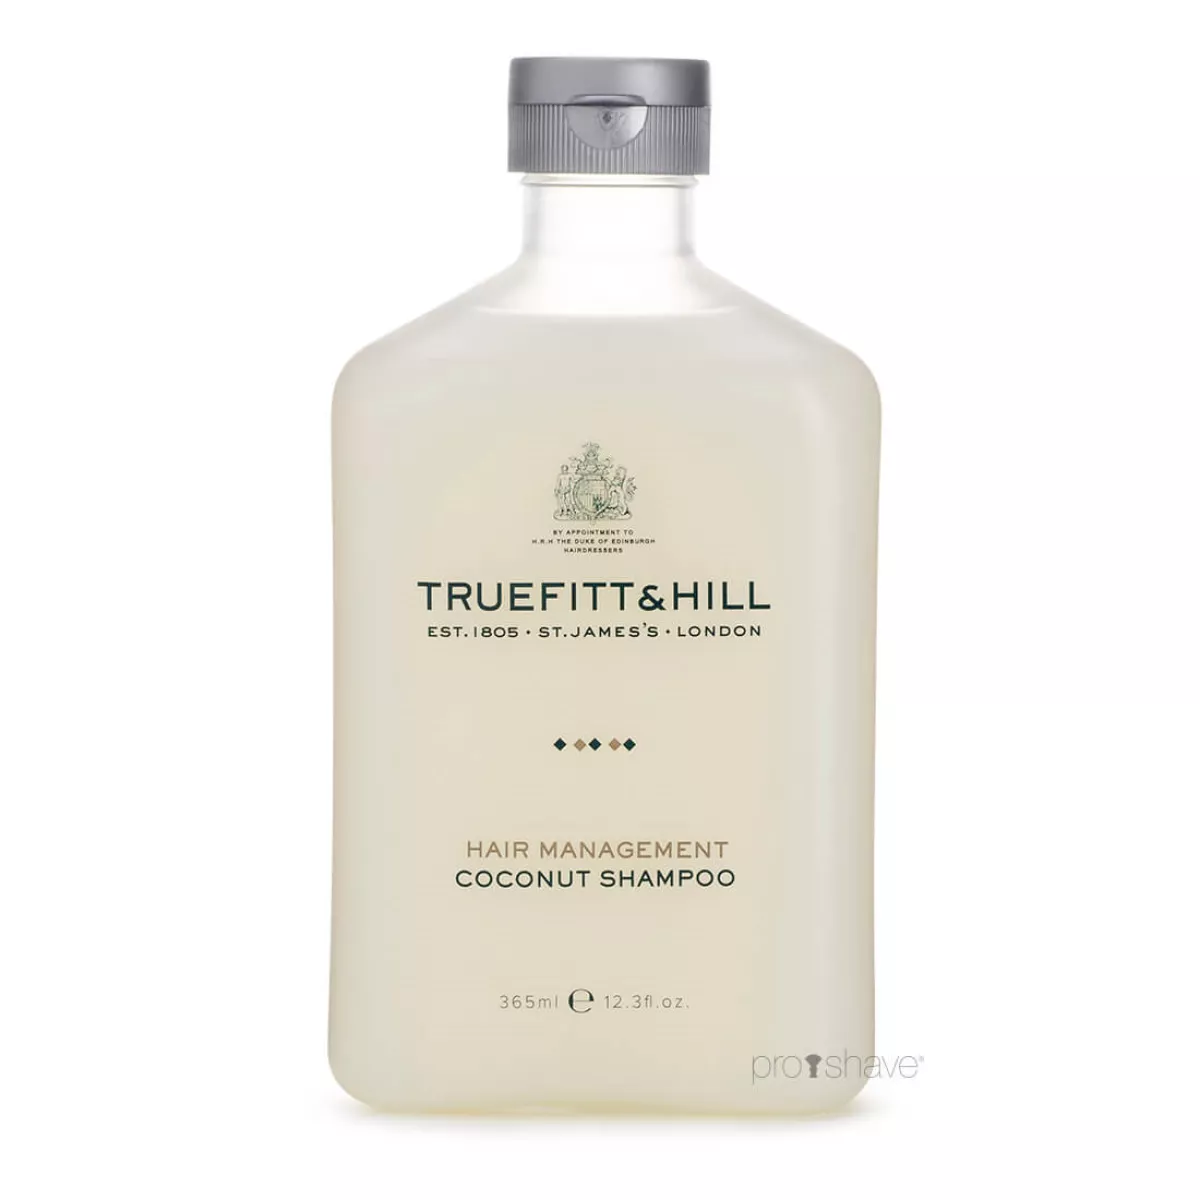 #2 - Truefitt & Hill Coconut Shampoo, 365 ml.